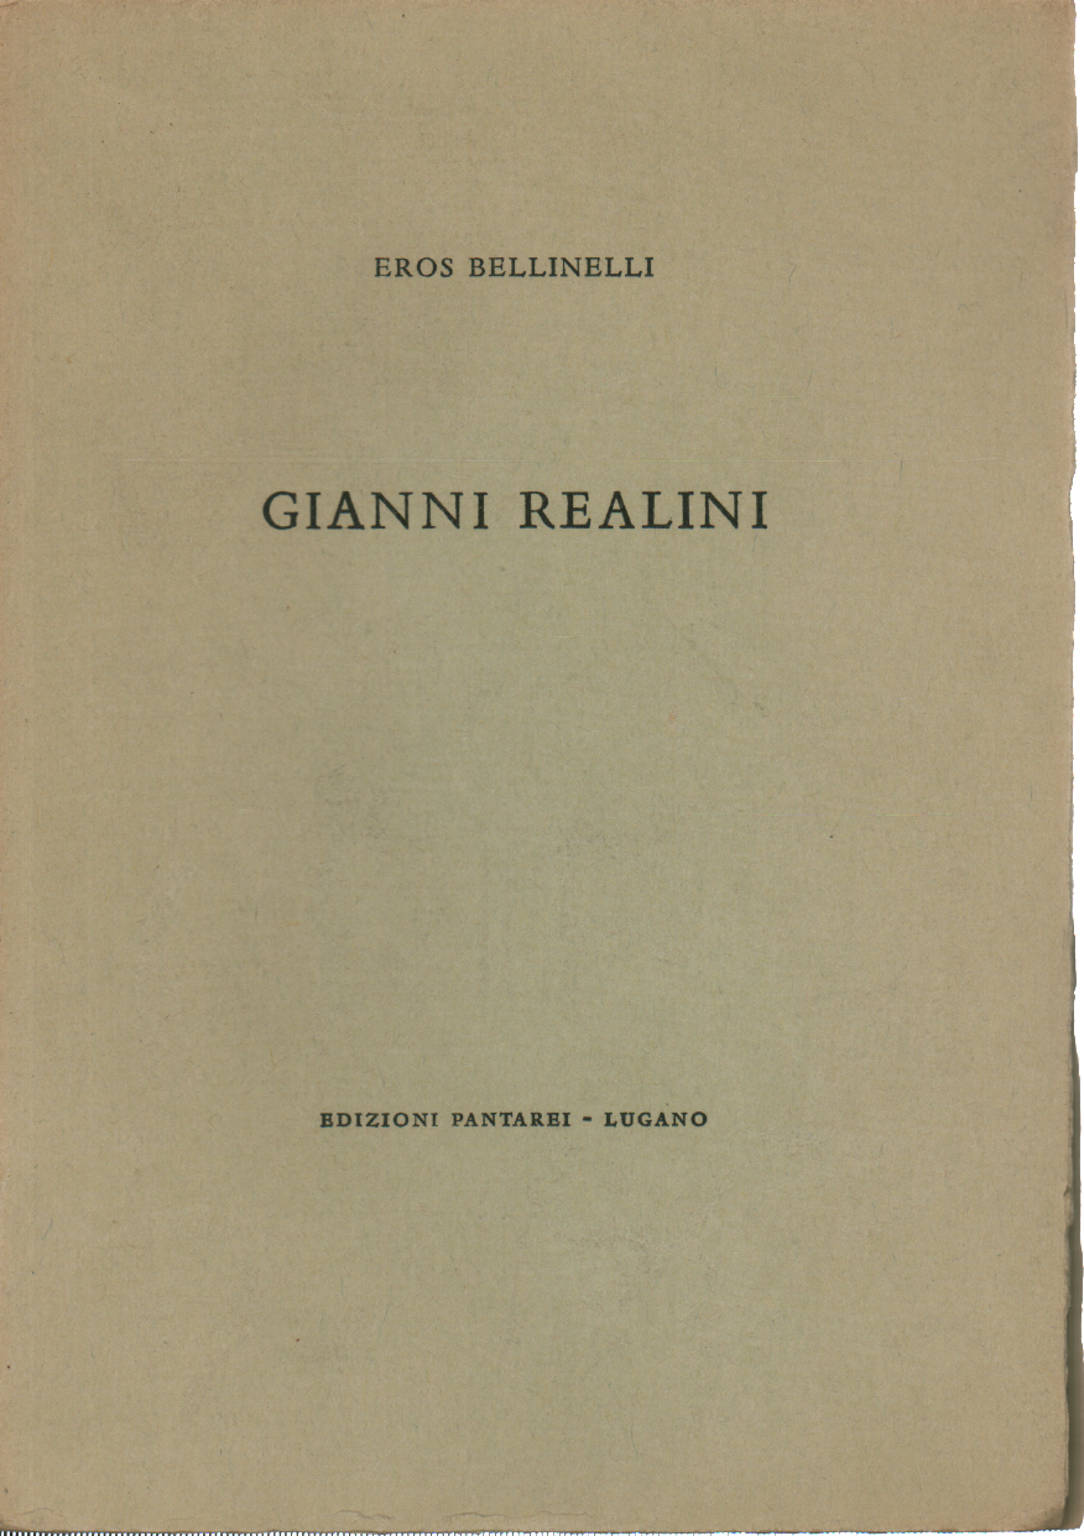 Gianni Realini, Eros Bellinelli